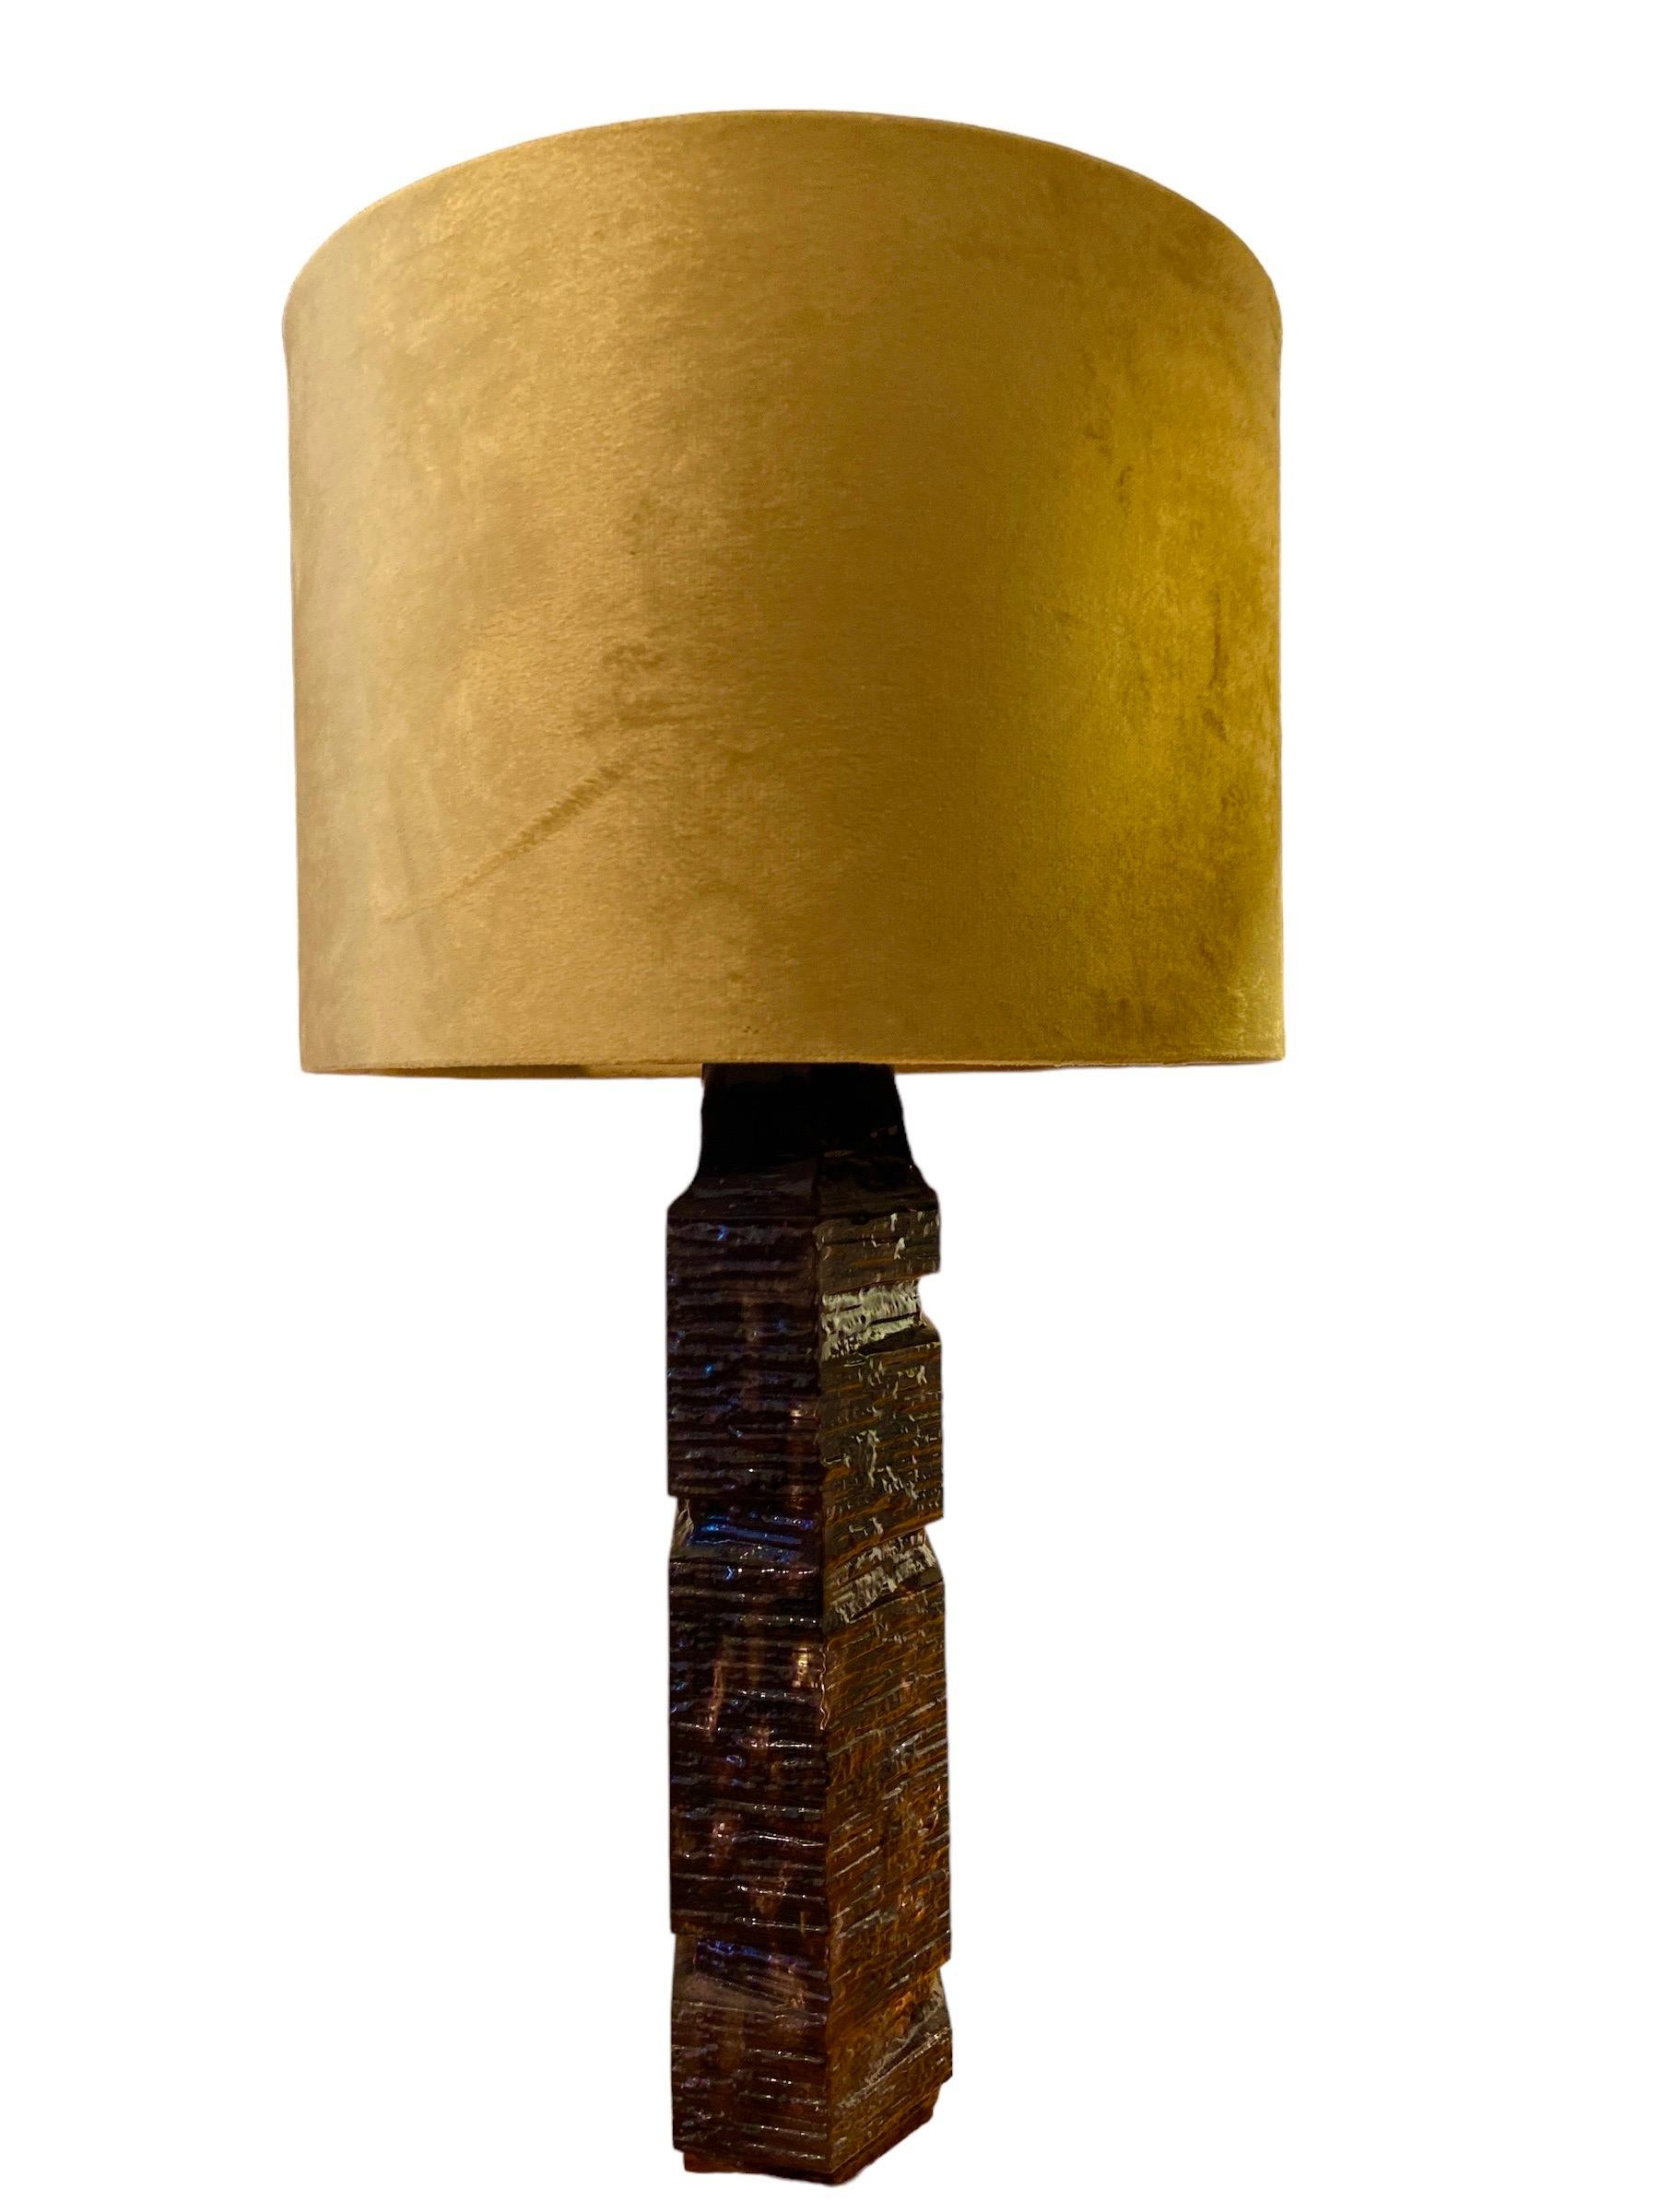 Italian Brutalist table lamp by César Baldaccini For Sale